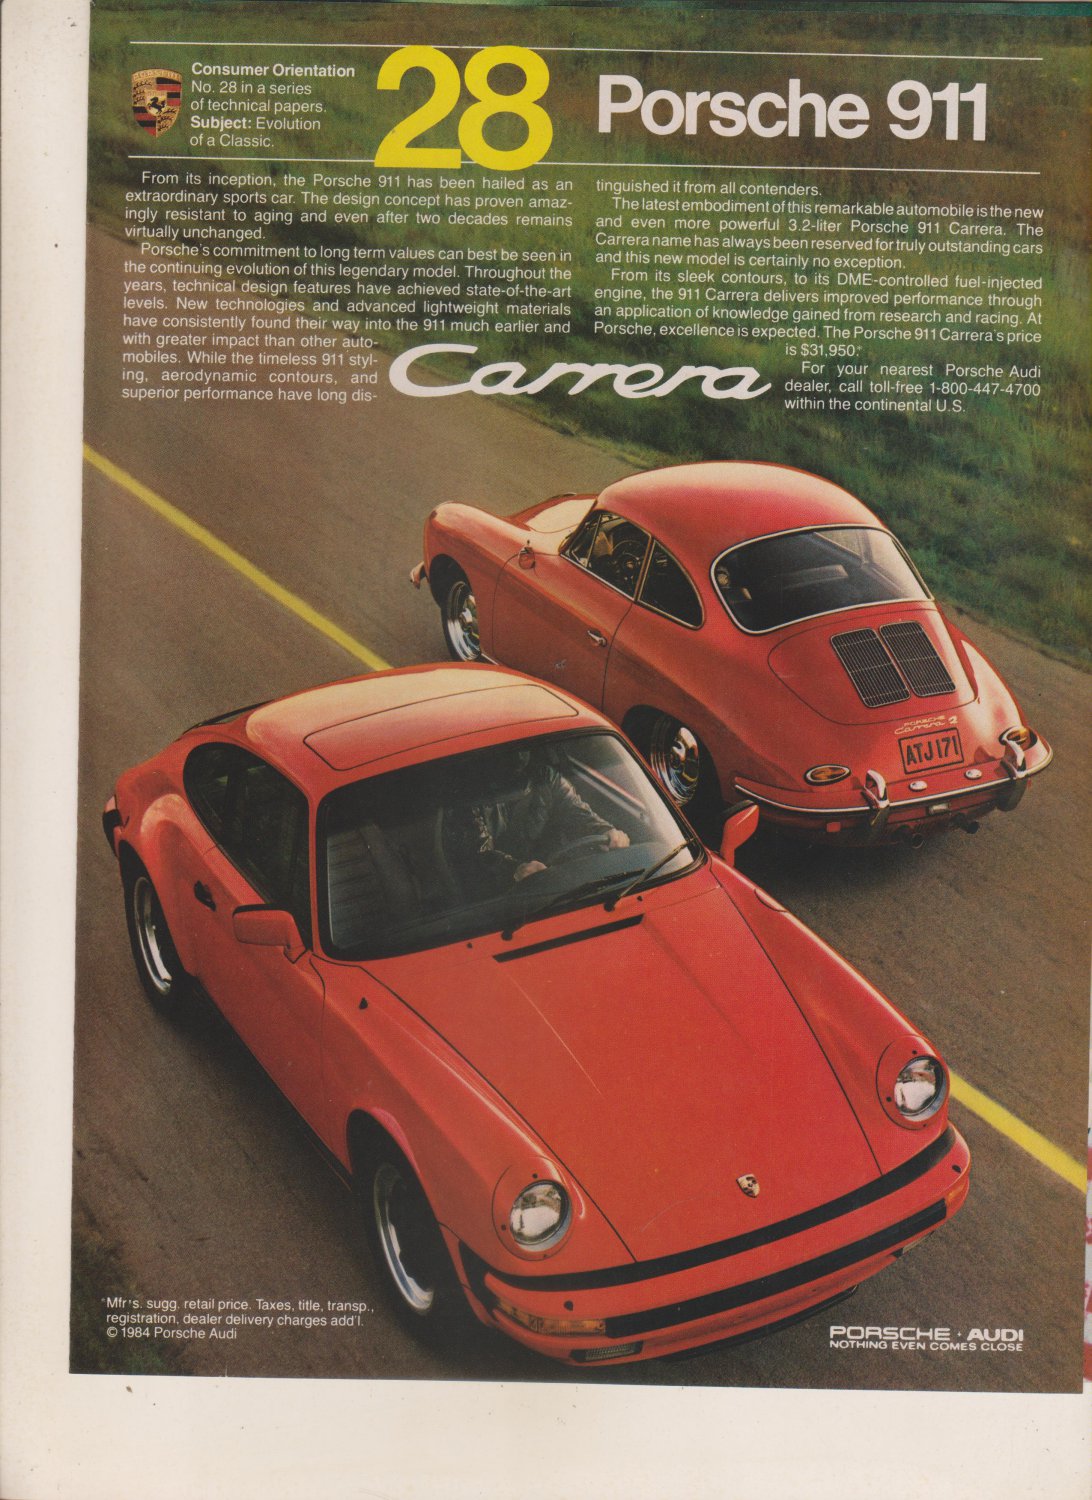 ORIGINAL 1984 VINTAGE MAGAZINE Print ADVERTISEMENT for the PORSCHE 911 Carrera Sports Car!